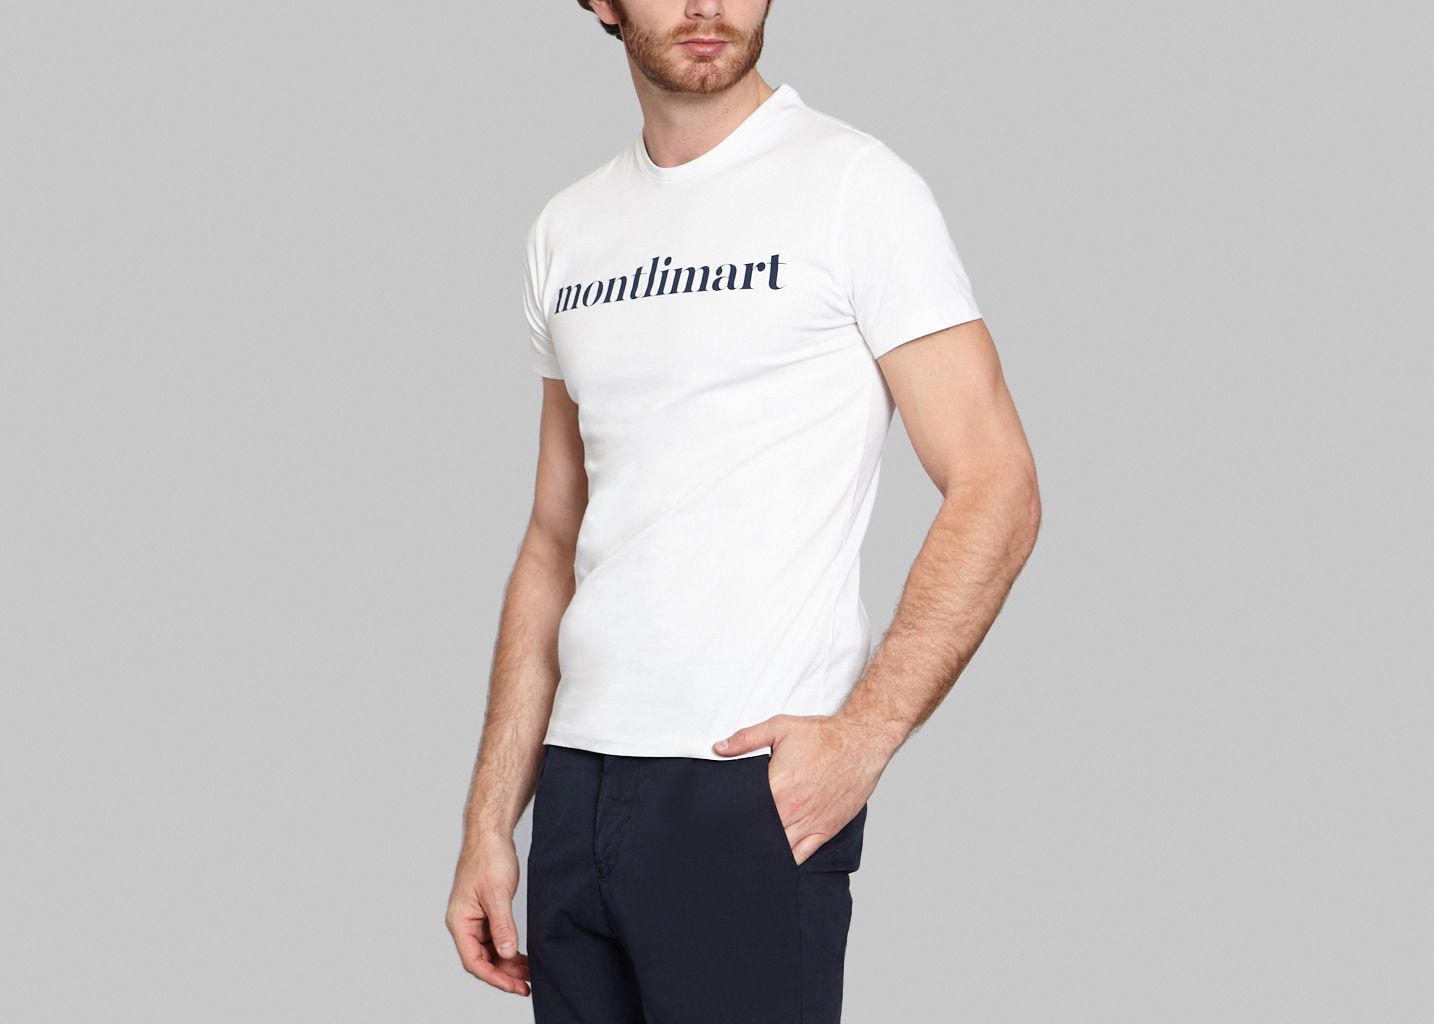 Villageois T-shirt - Montlimart